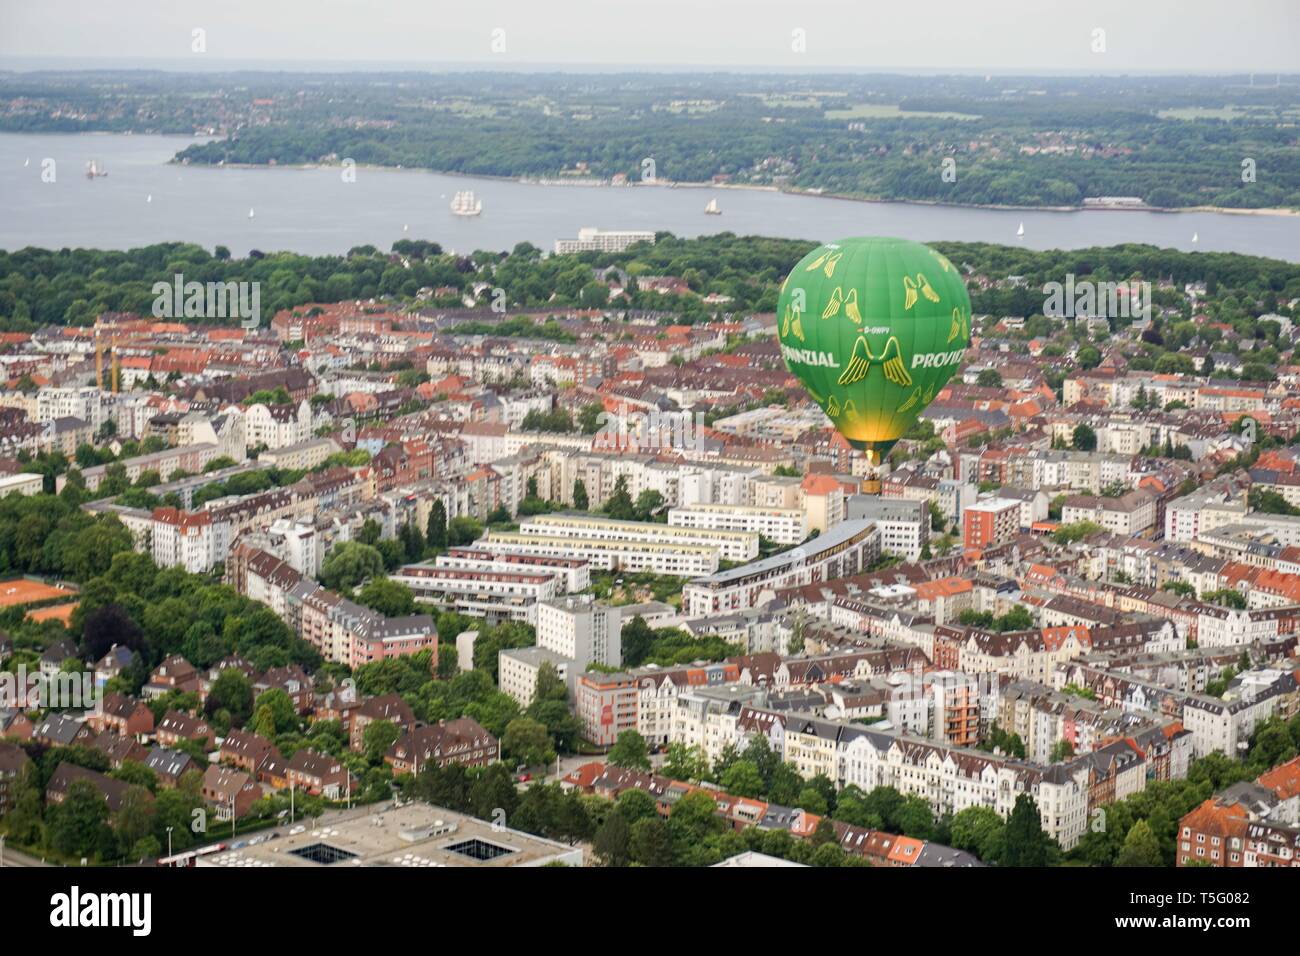 Luftaufnahme Kieler Woche Provinzial Heißluftballon / Fotografia aerea mongolfiera Foto Stock